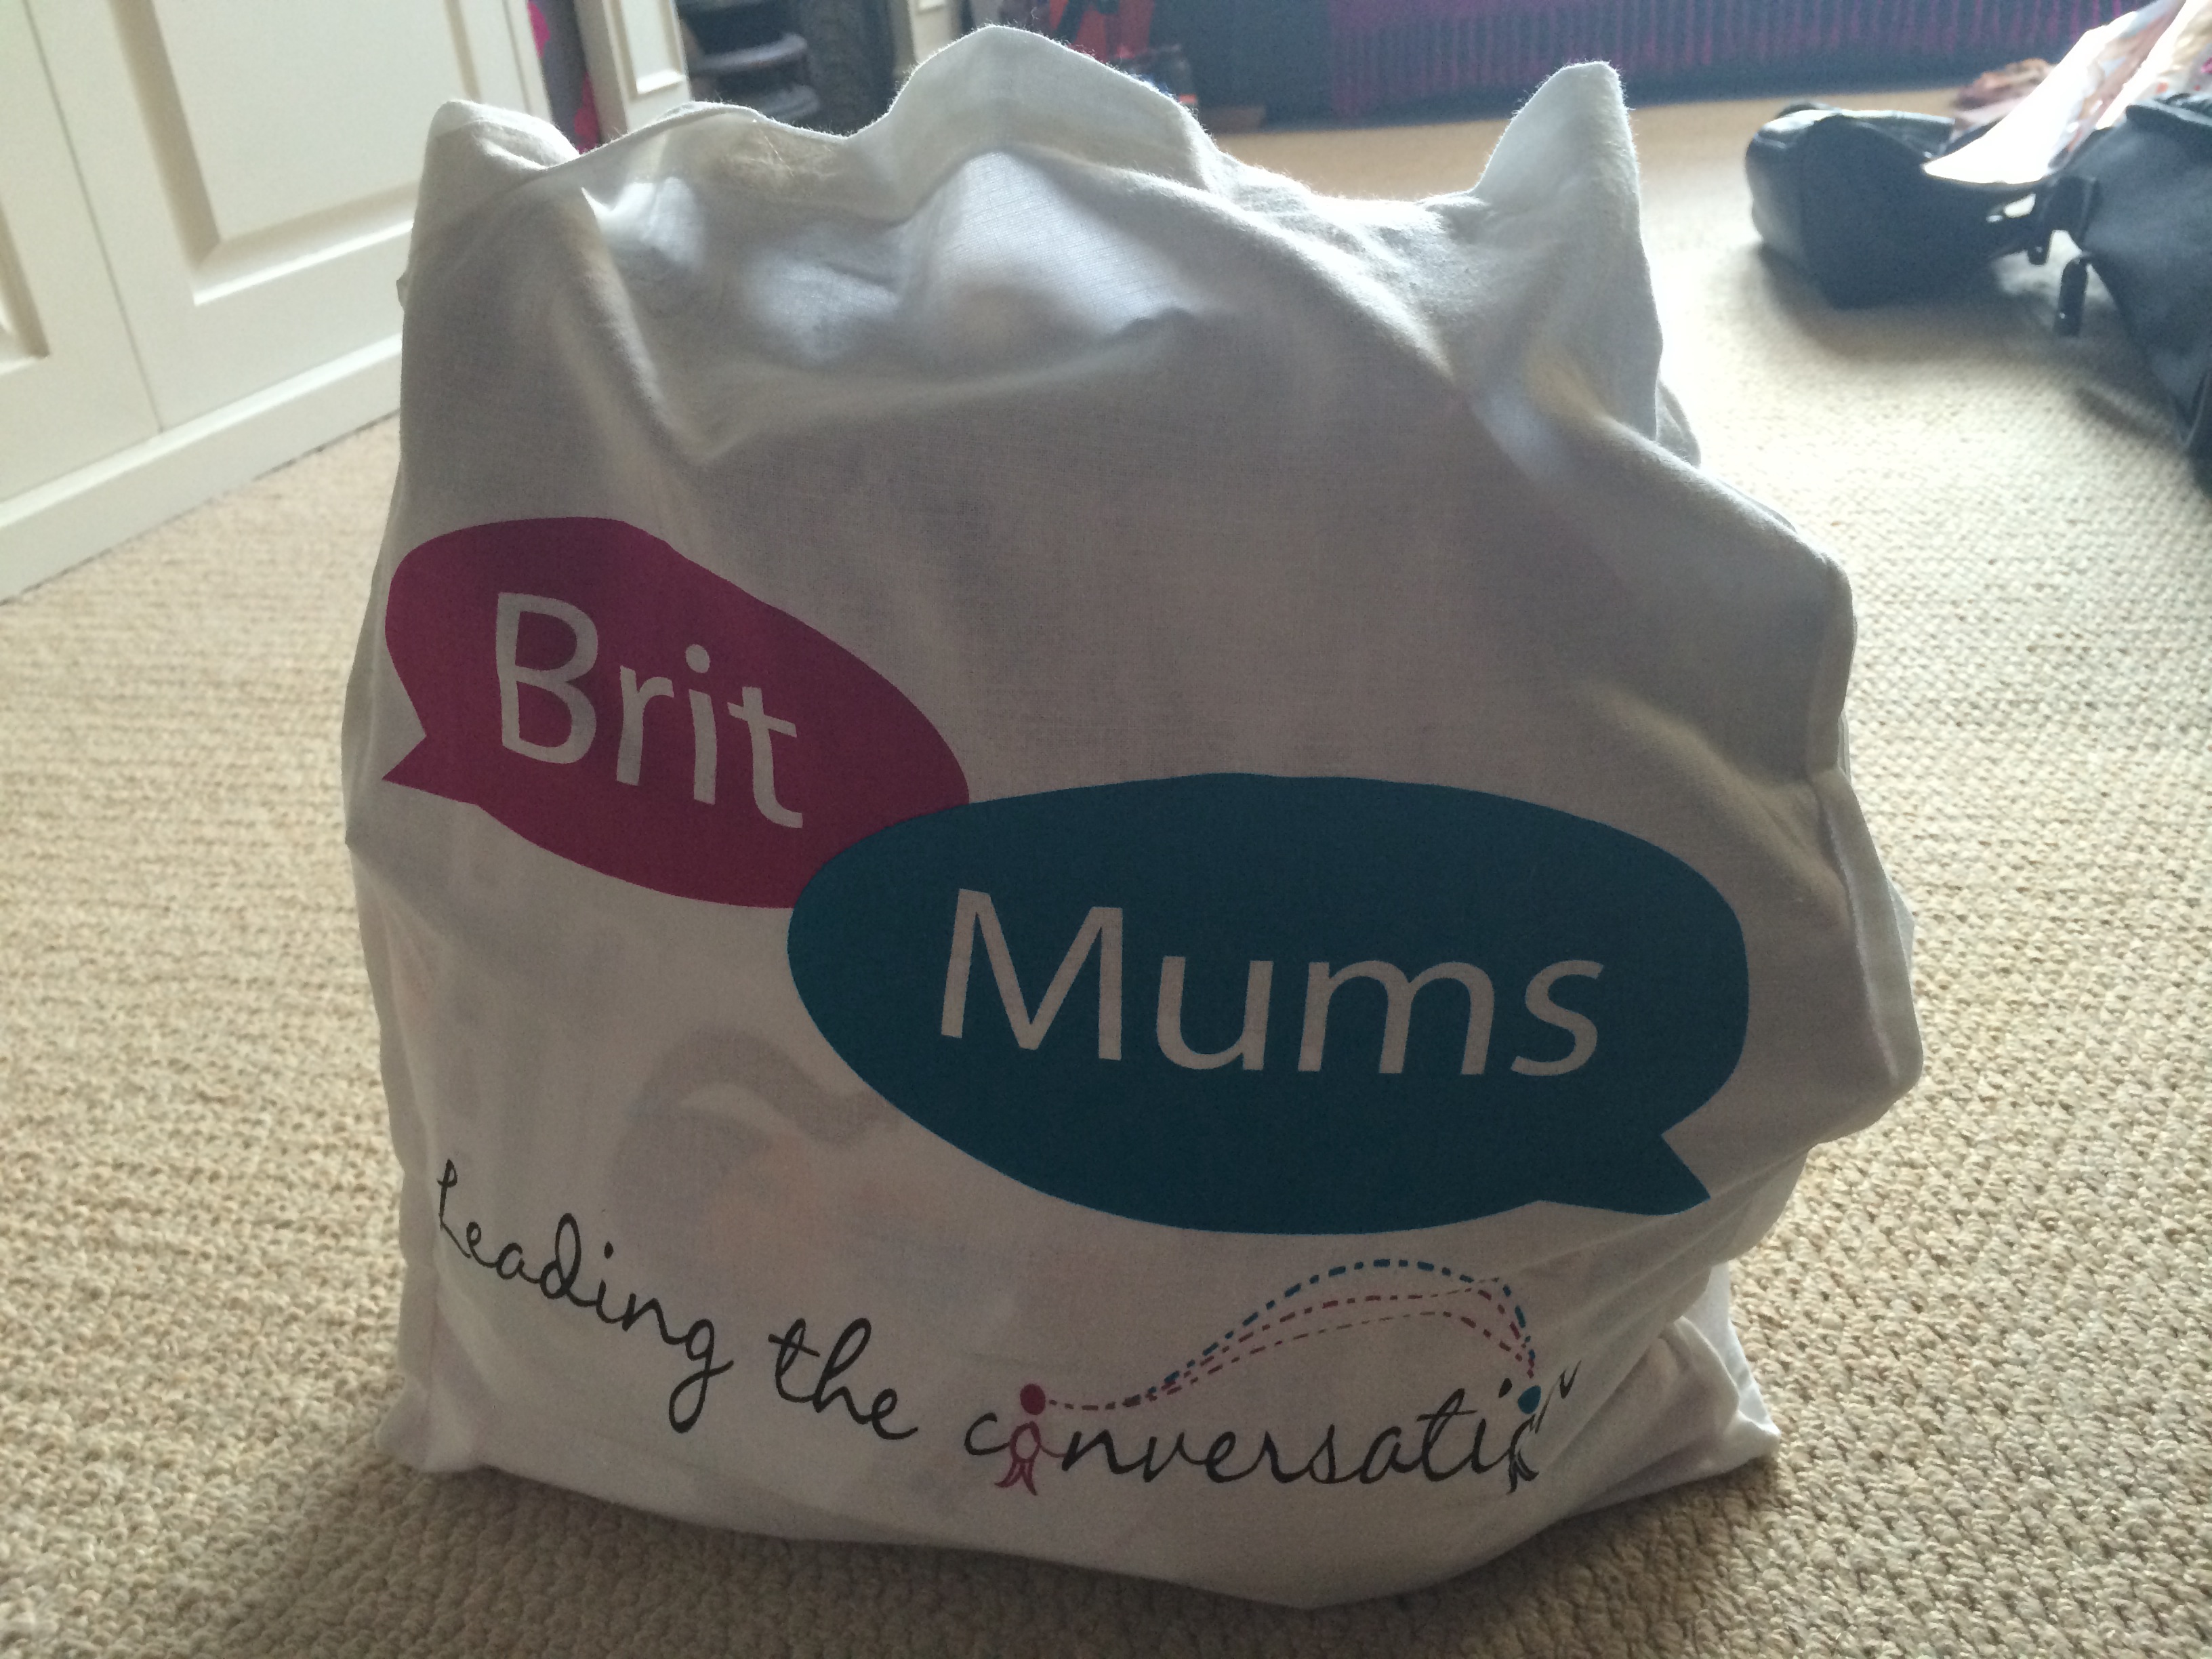 BritMums Live Goodie Bag